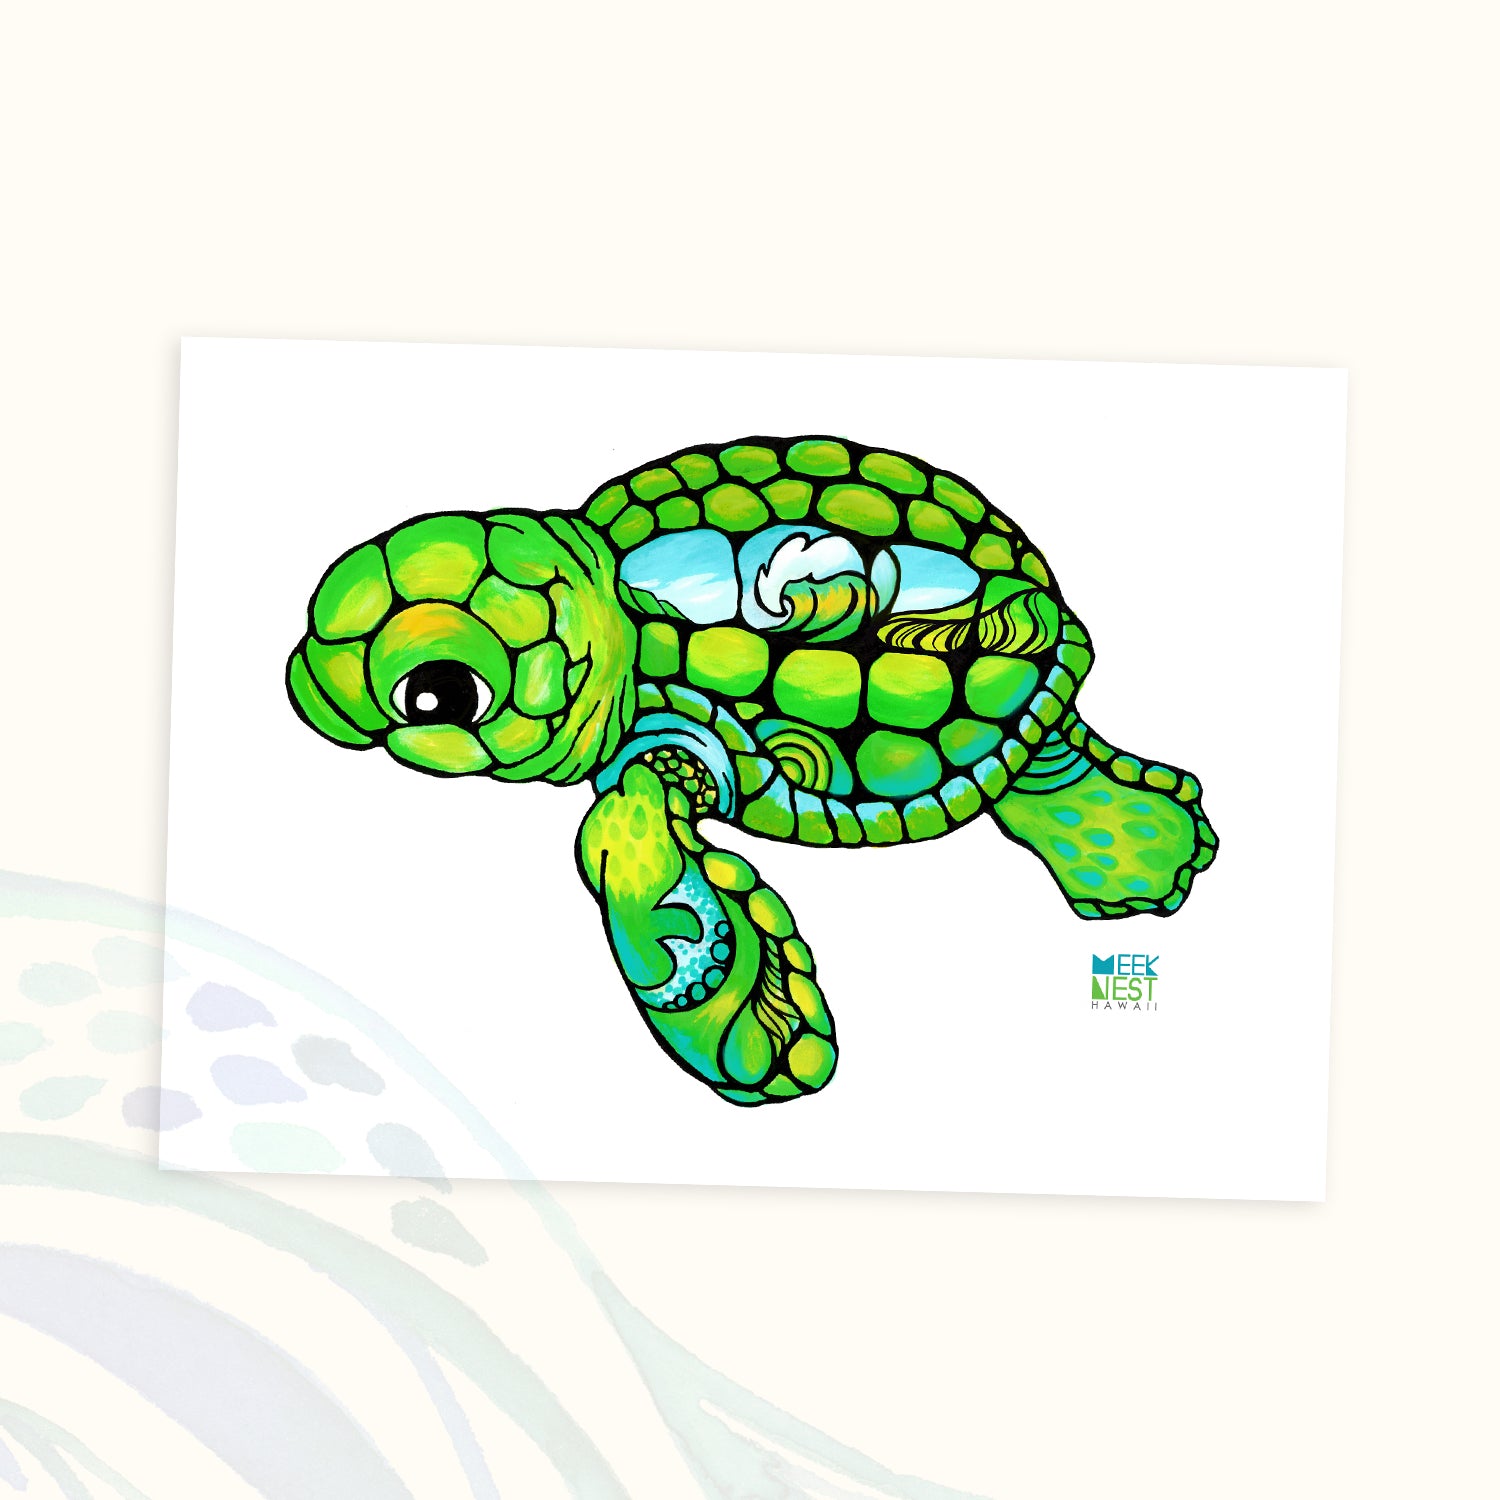 Kokua Collection: Honi the Honu (Turtle)